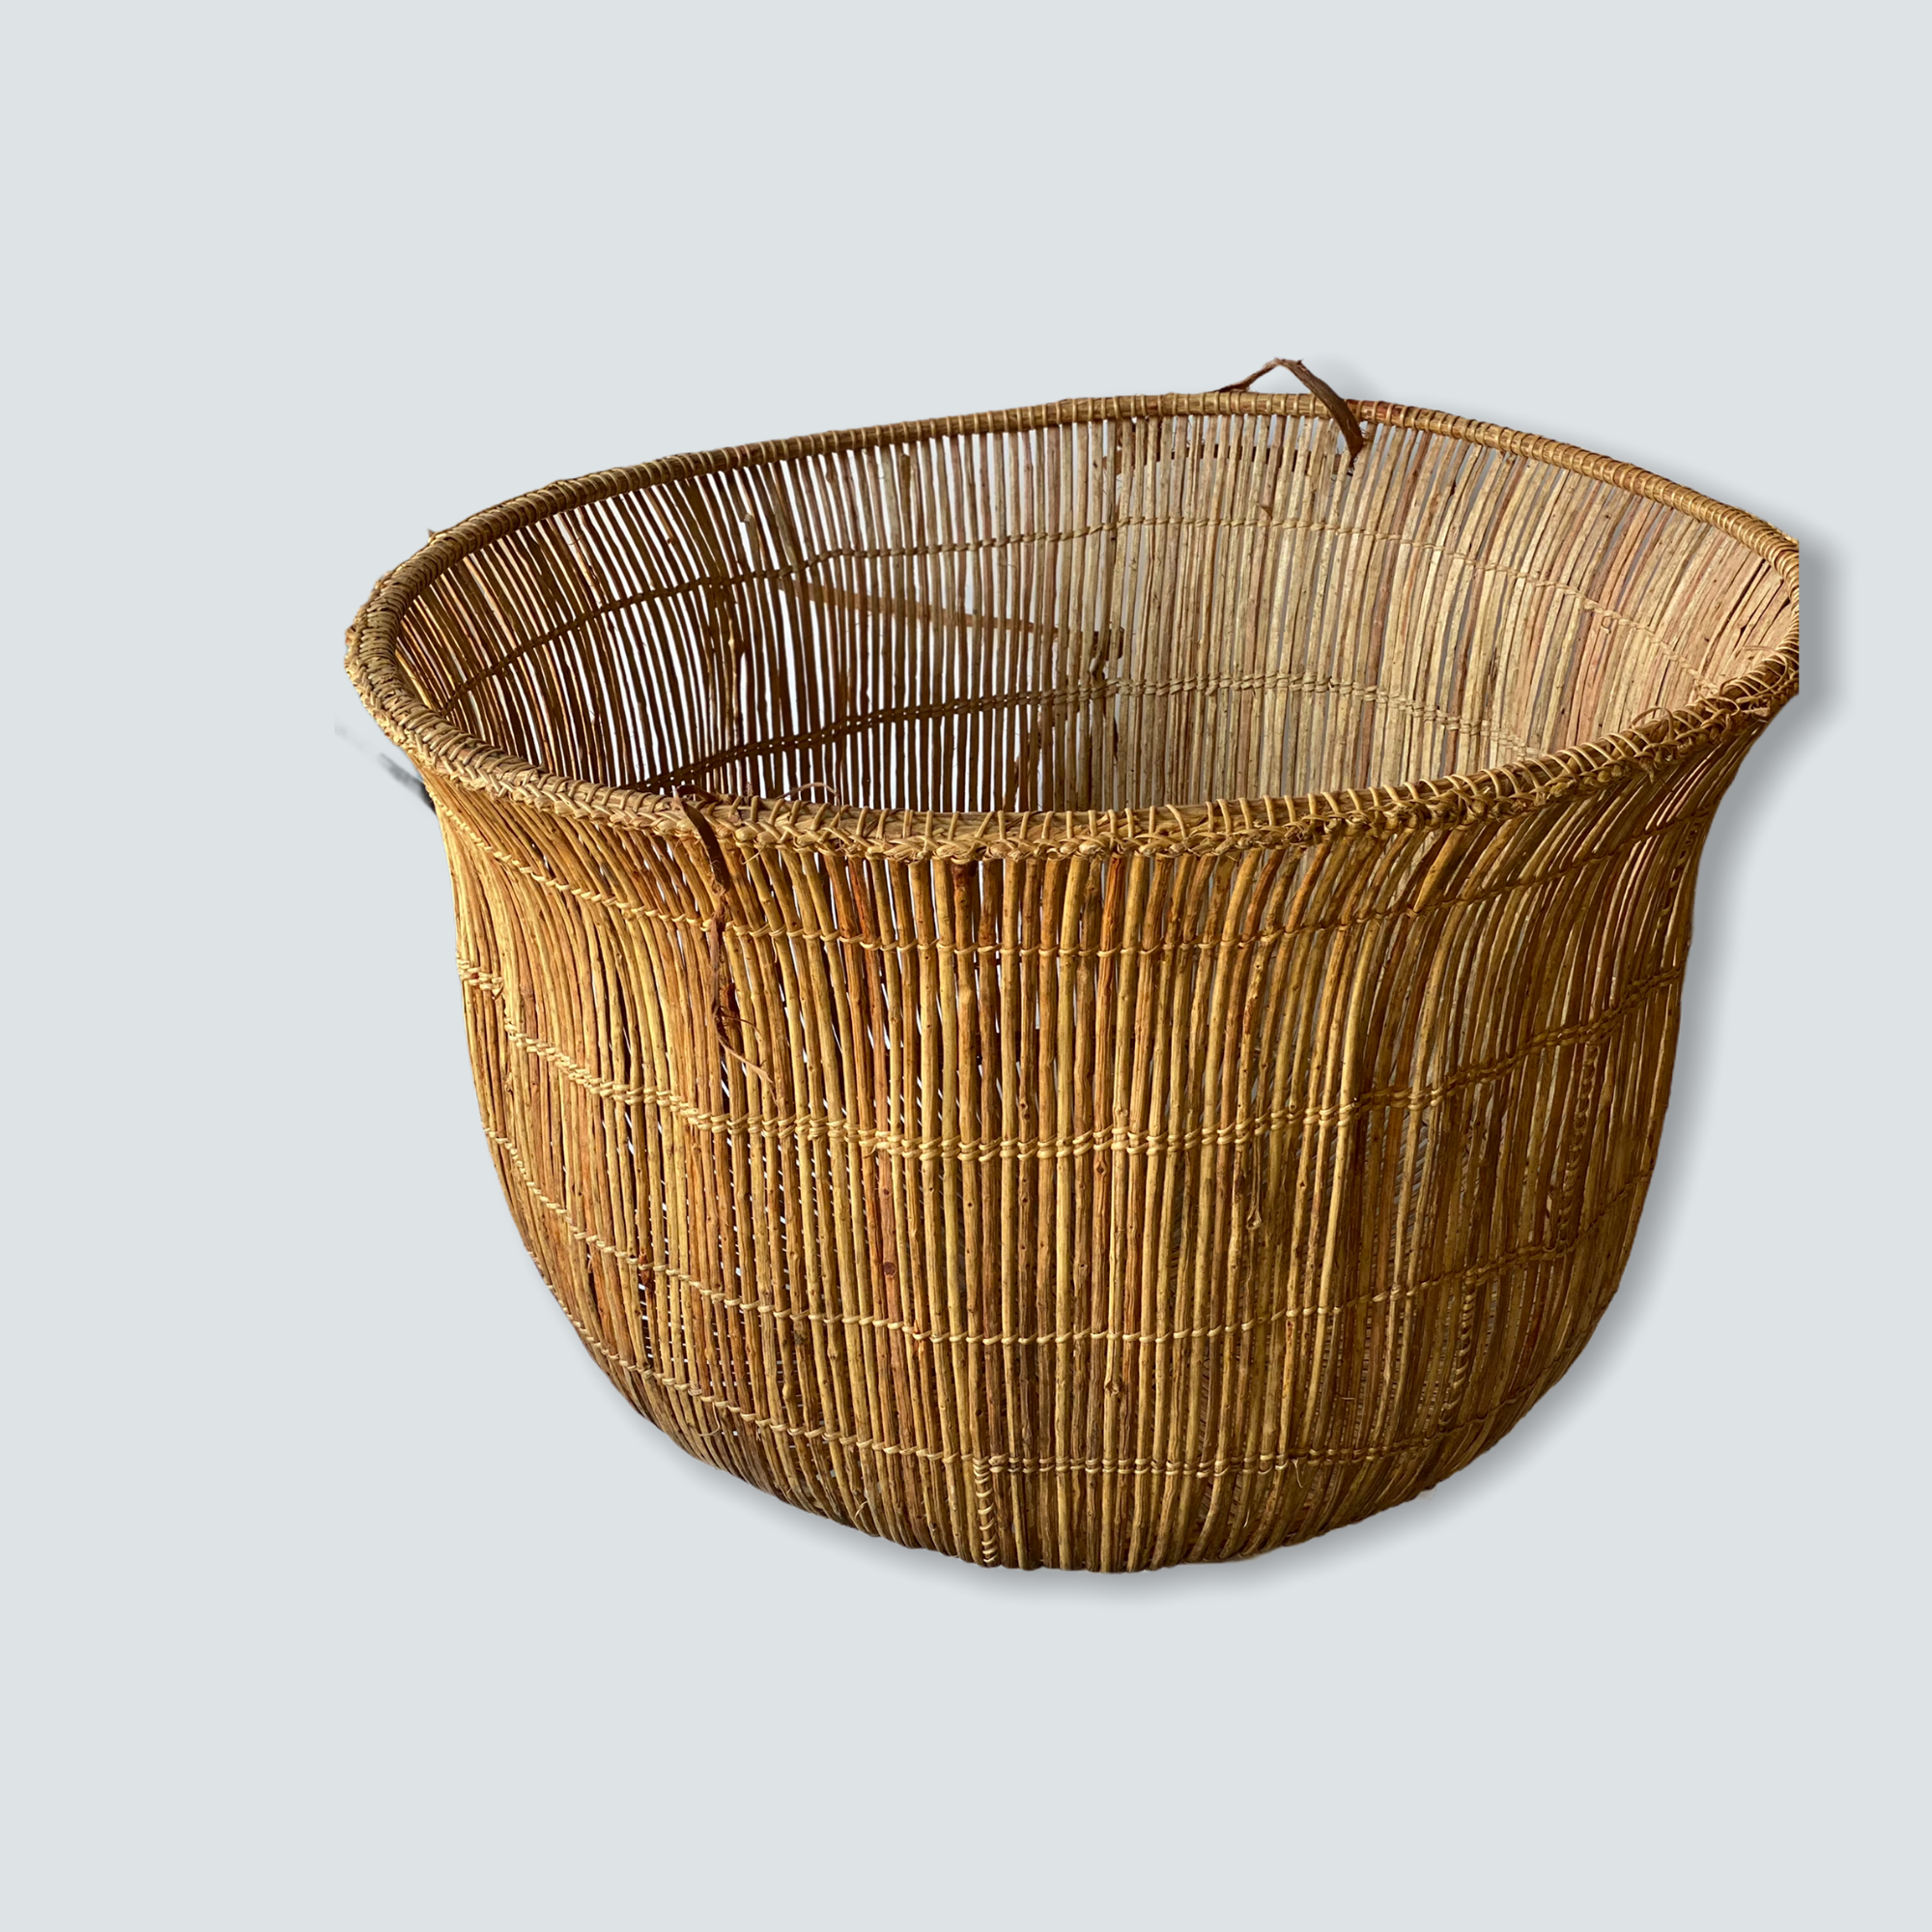 Fishing Basket - Tanzania very large